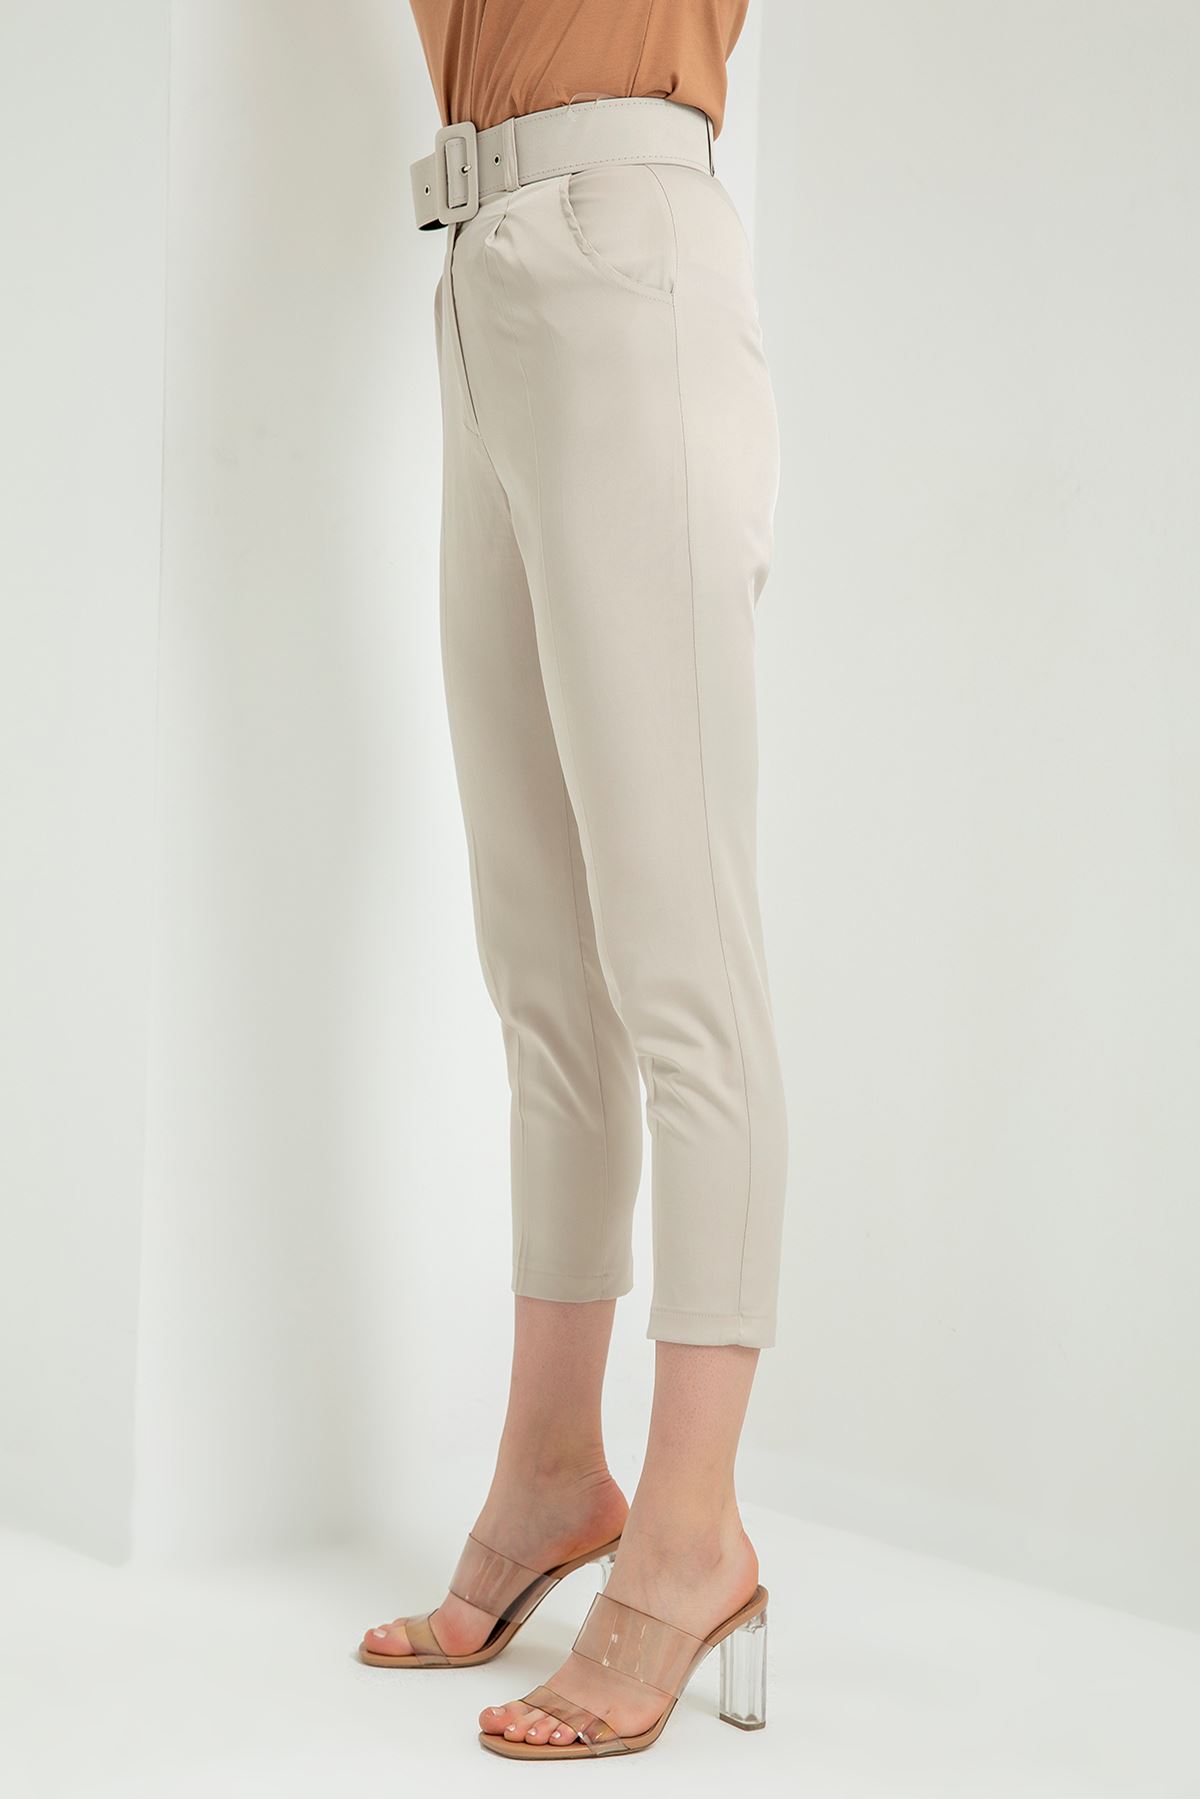 Atlas Fabric 3/4 Short Belted Women'S Trouser - Stone